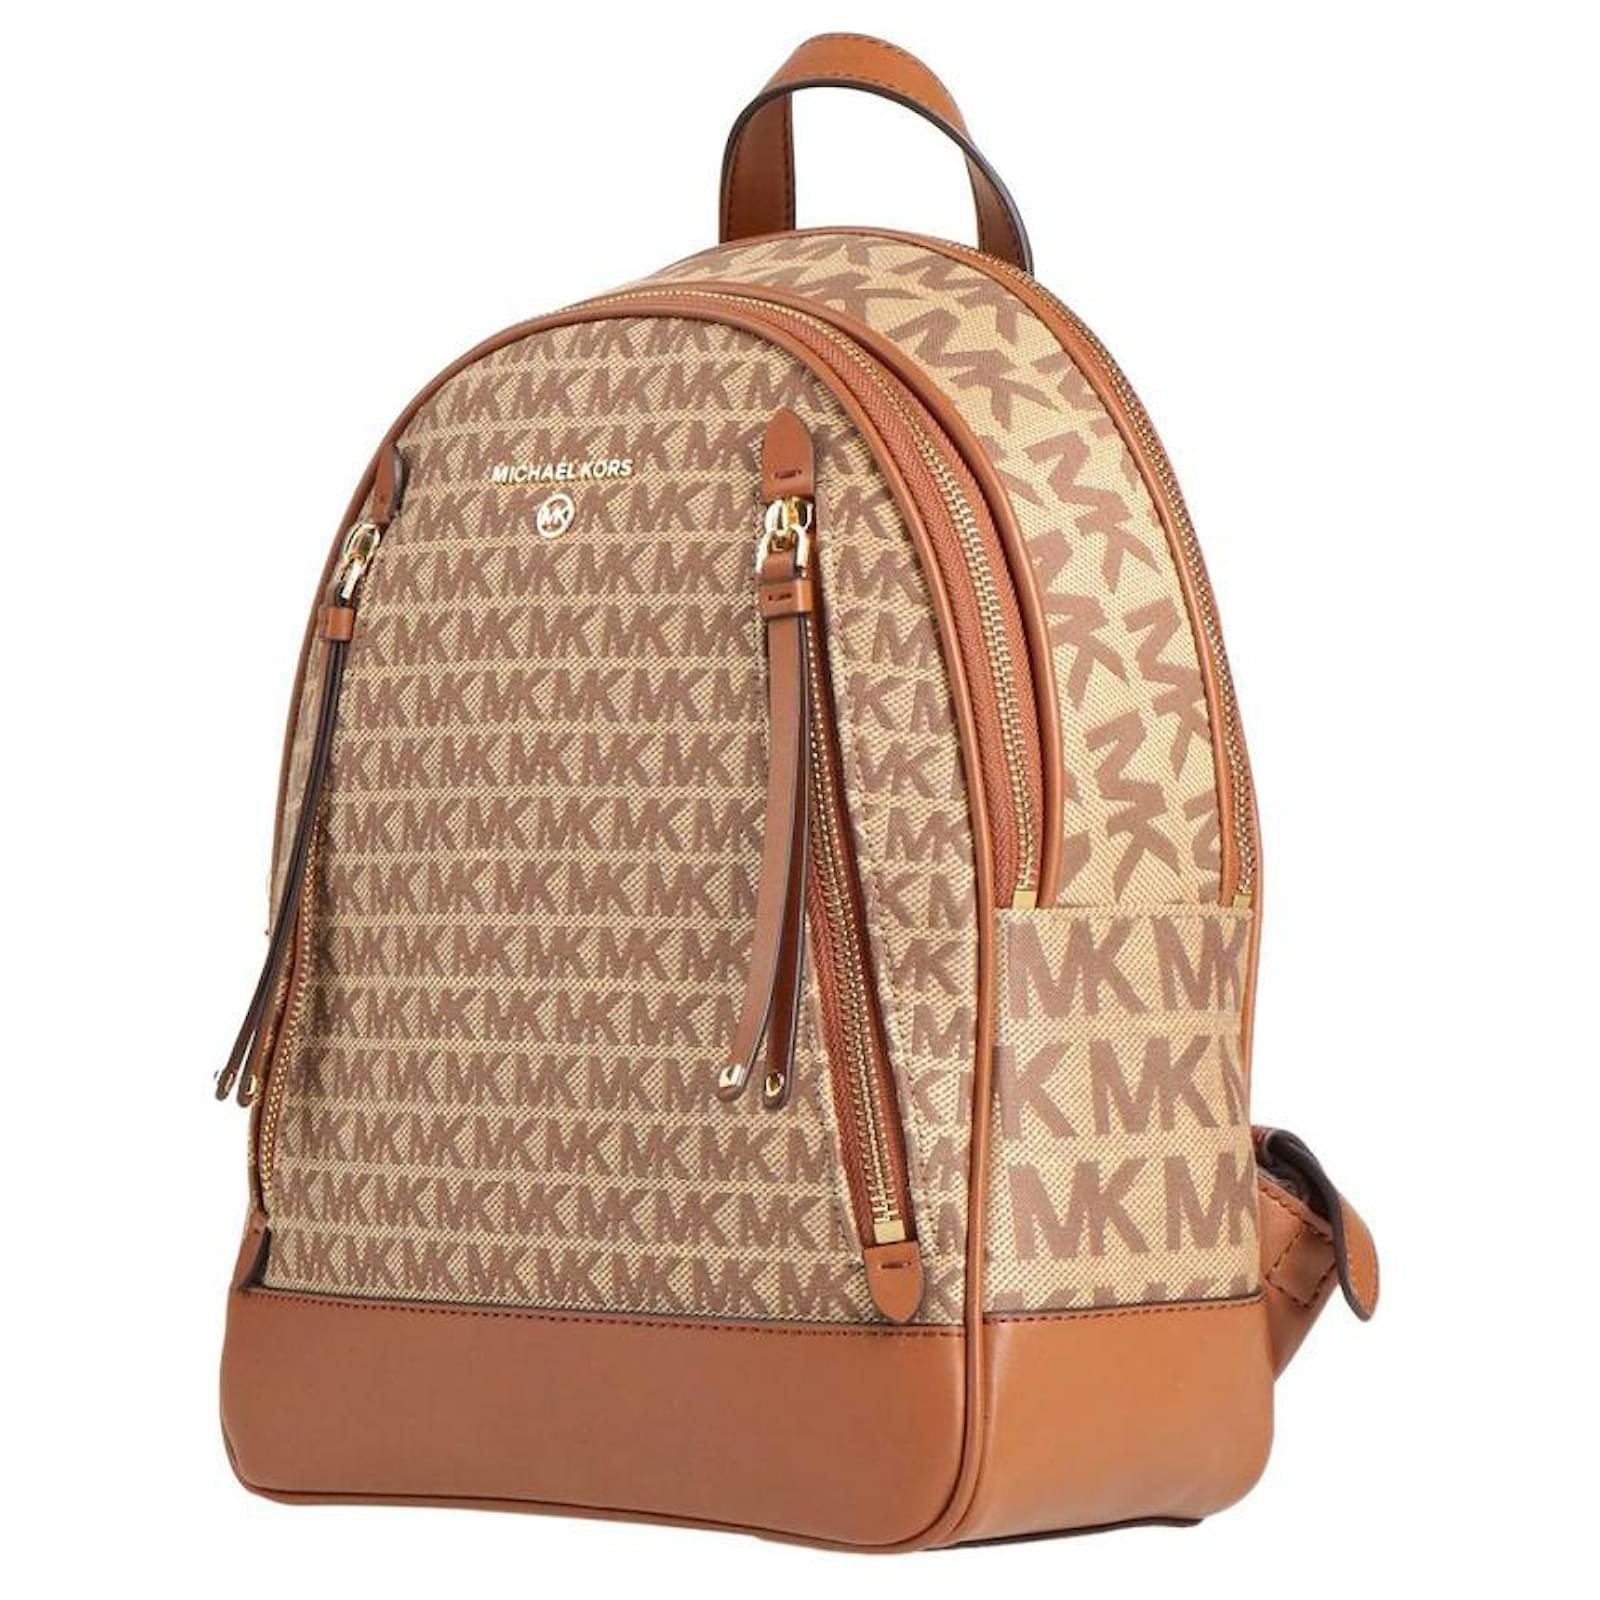 Leopard Backpack (Colors: Red, Camel Brown,Black) – Sincerely Bagz